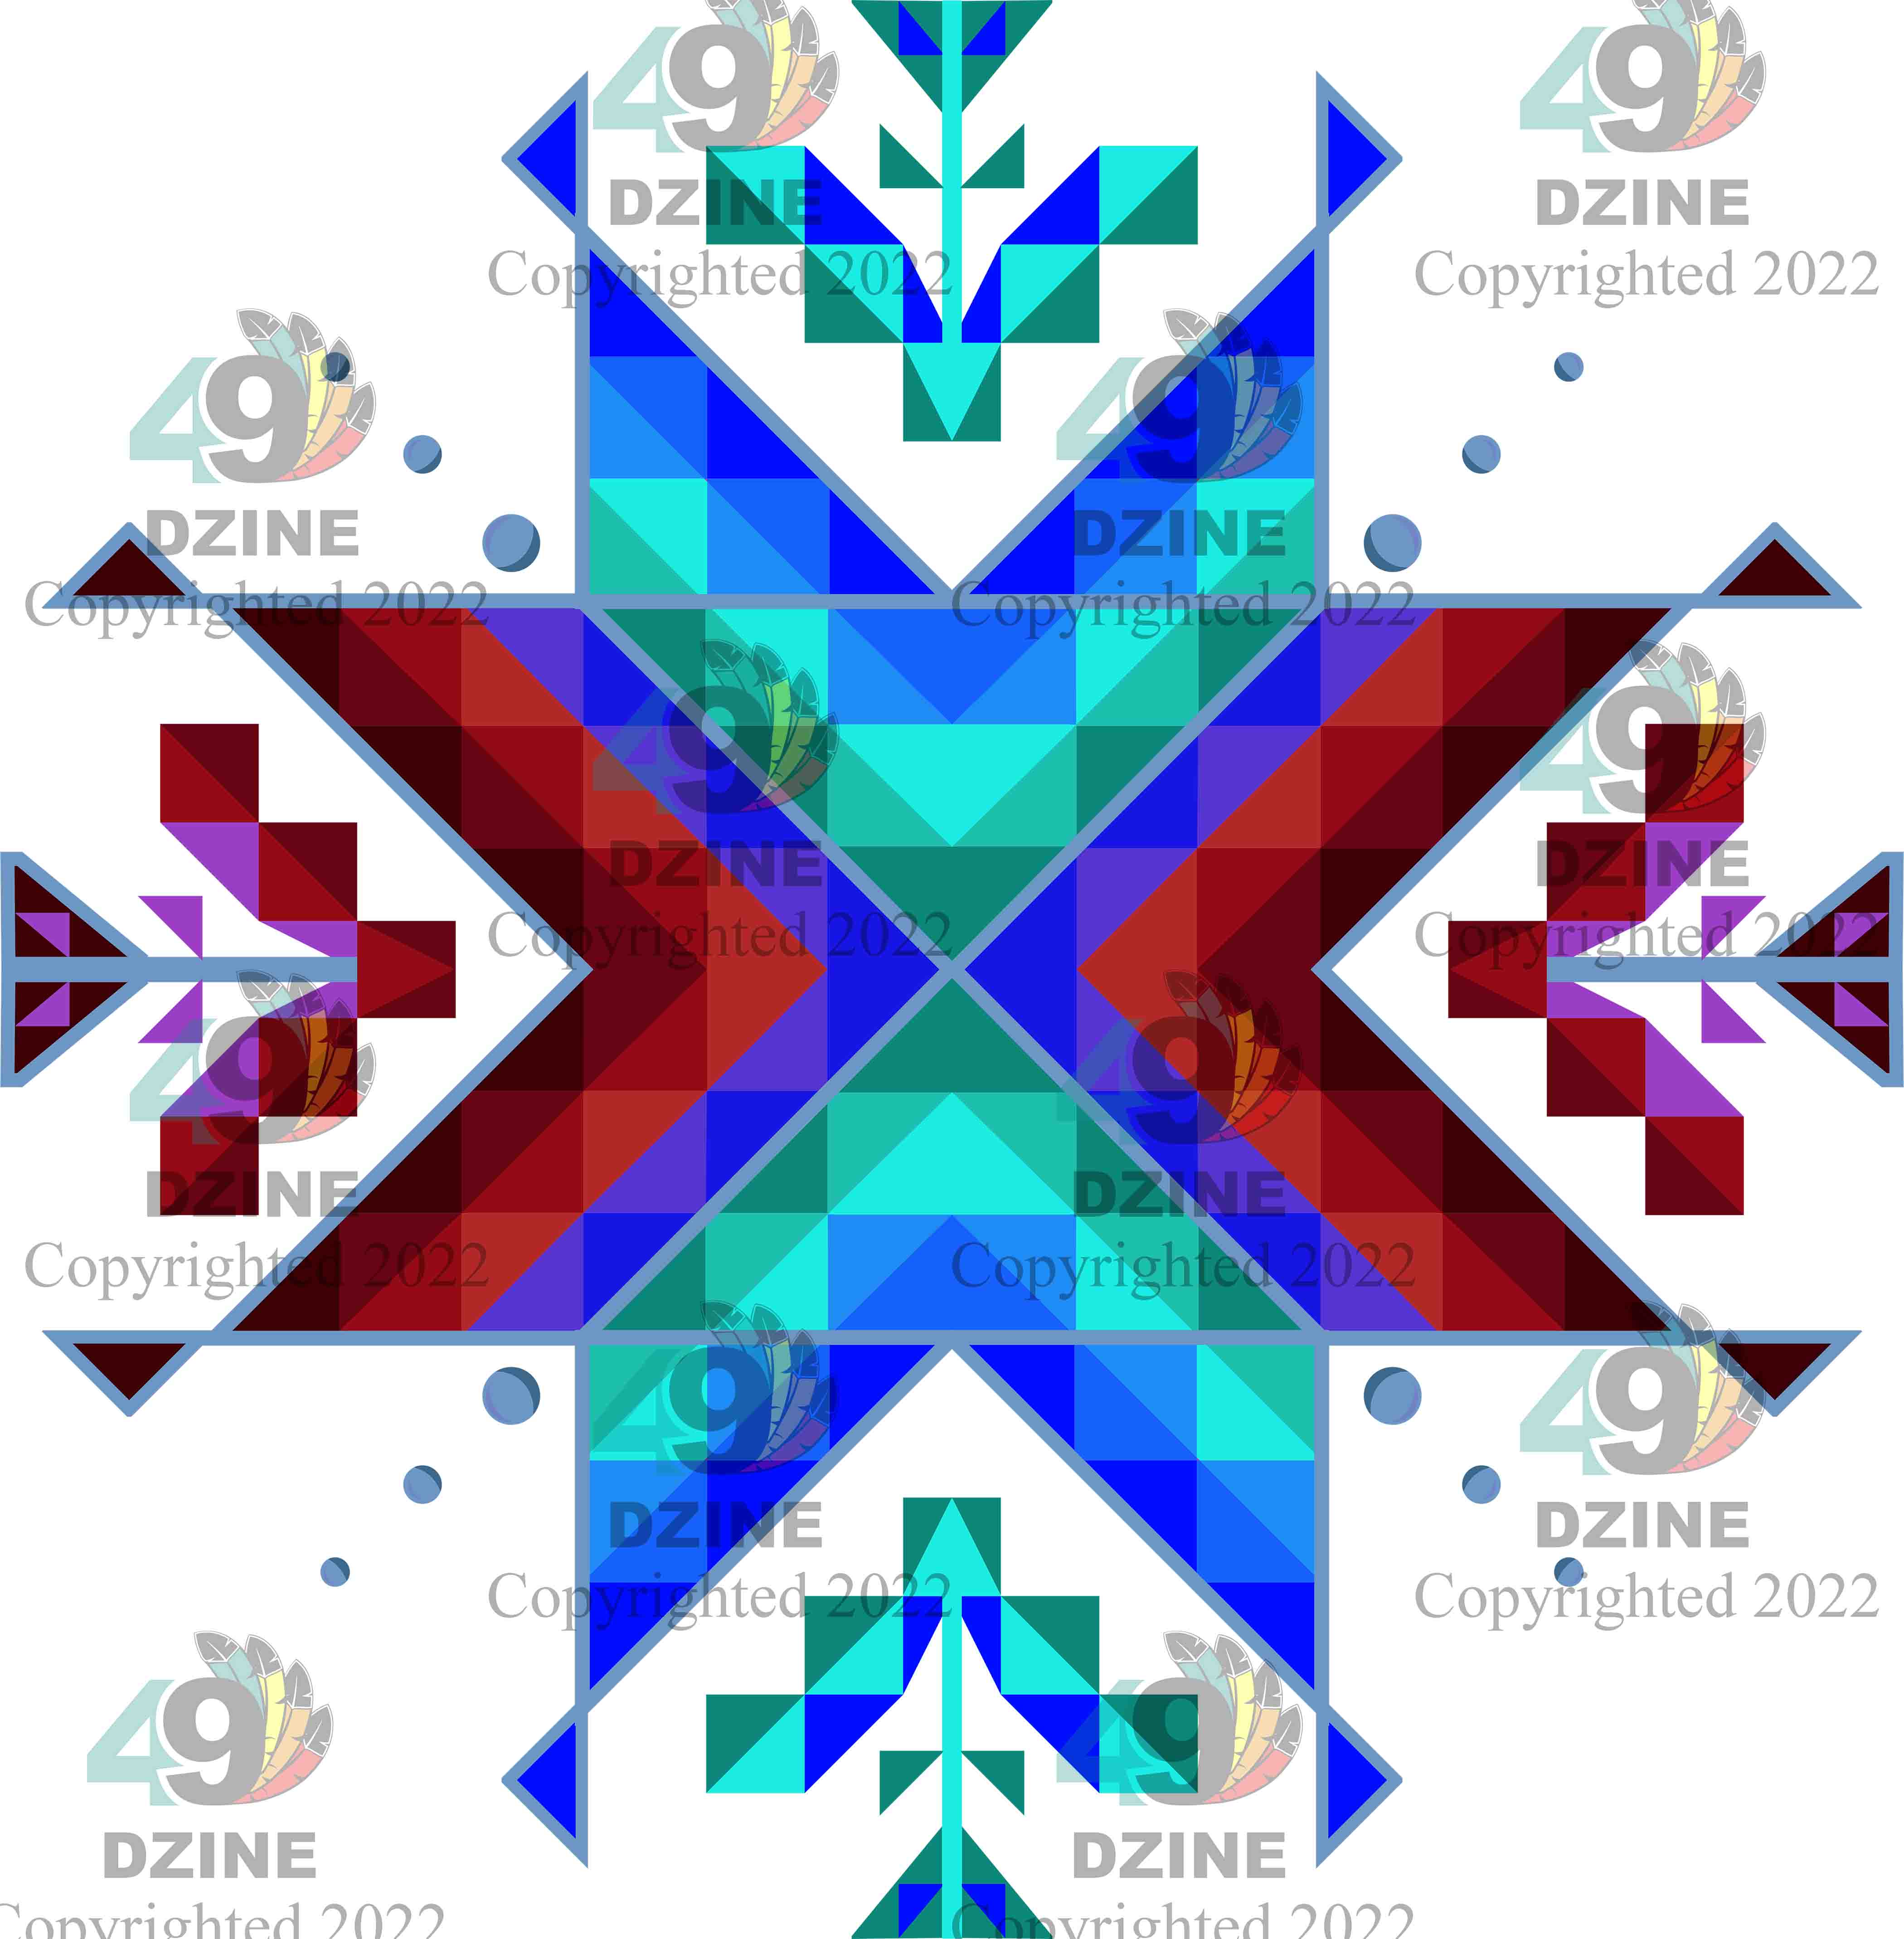 14-inch Geometric Transfer Dream of the Ancestors Transfers 49 Dzine Dream of the Ancestors Blue 